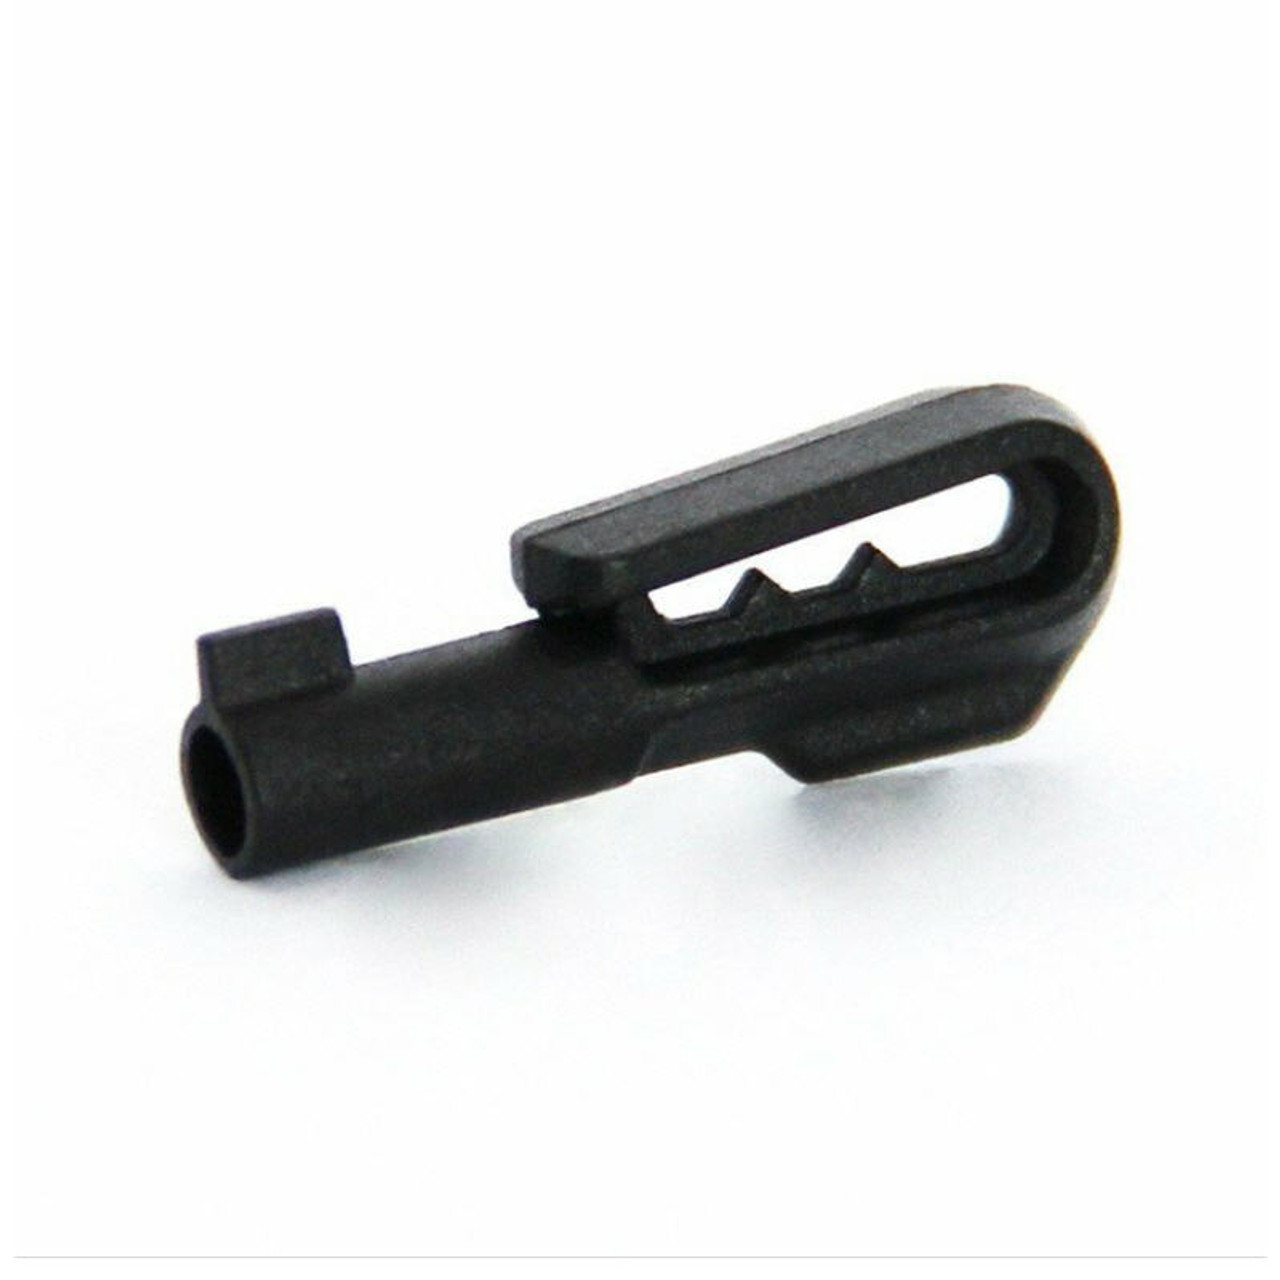 Larson Electronics - Concealable Backup Universal Handcuff Key (Plastic Handcuff  Key) 6 pack